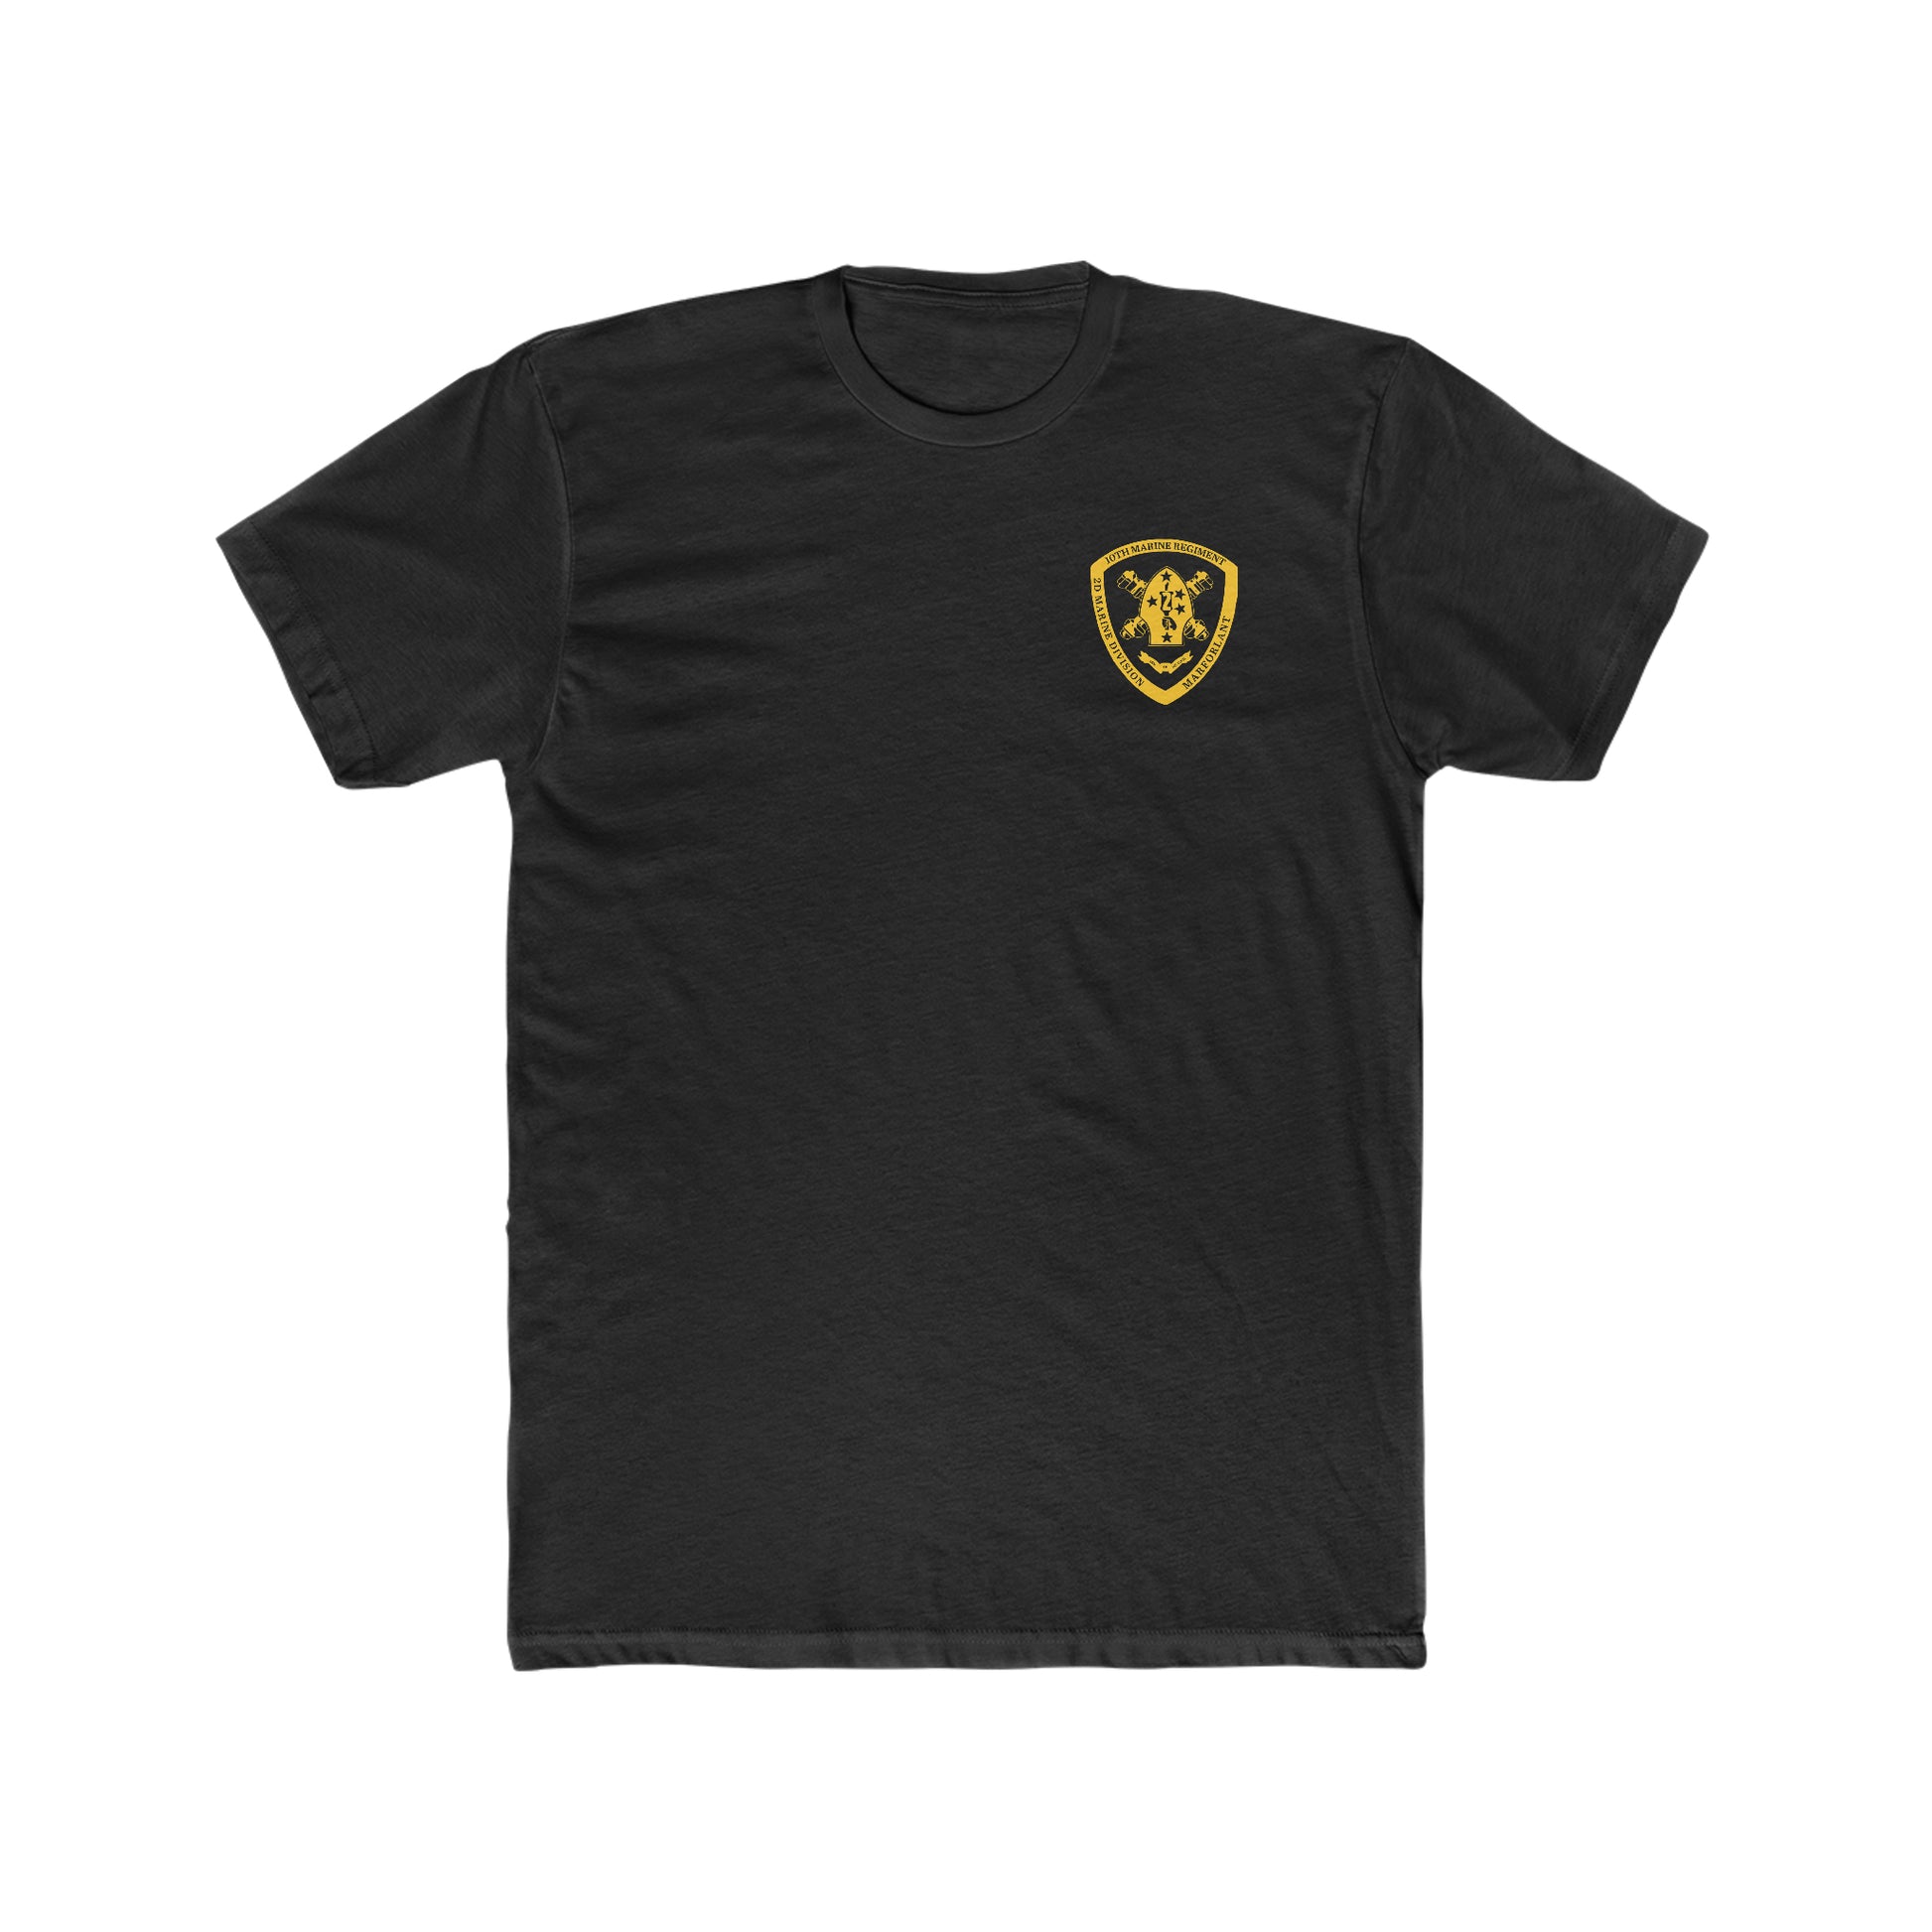 3rd Battalion 10th Marines t-shirt